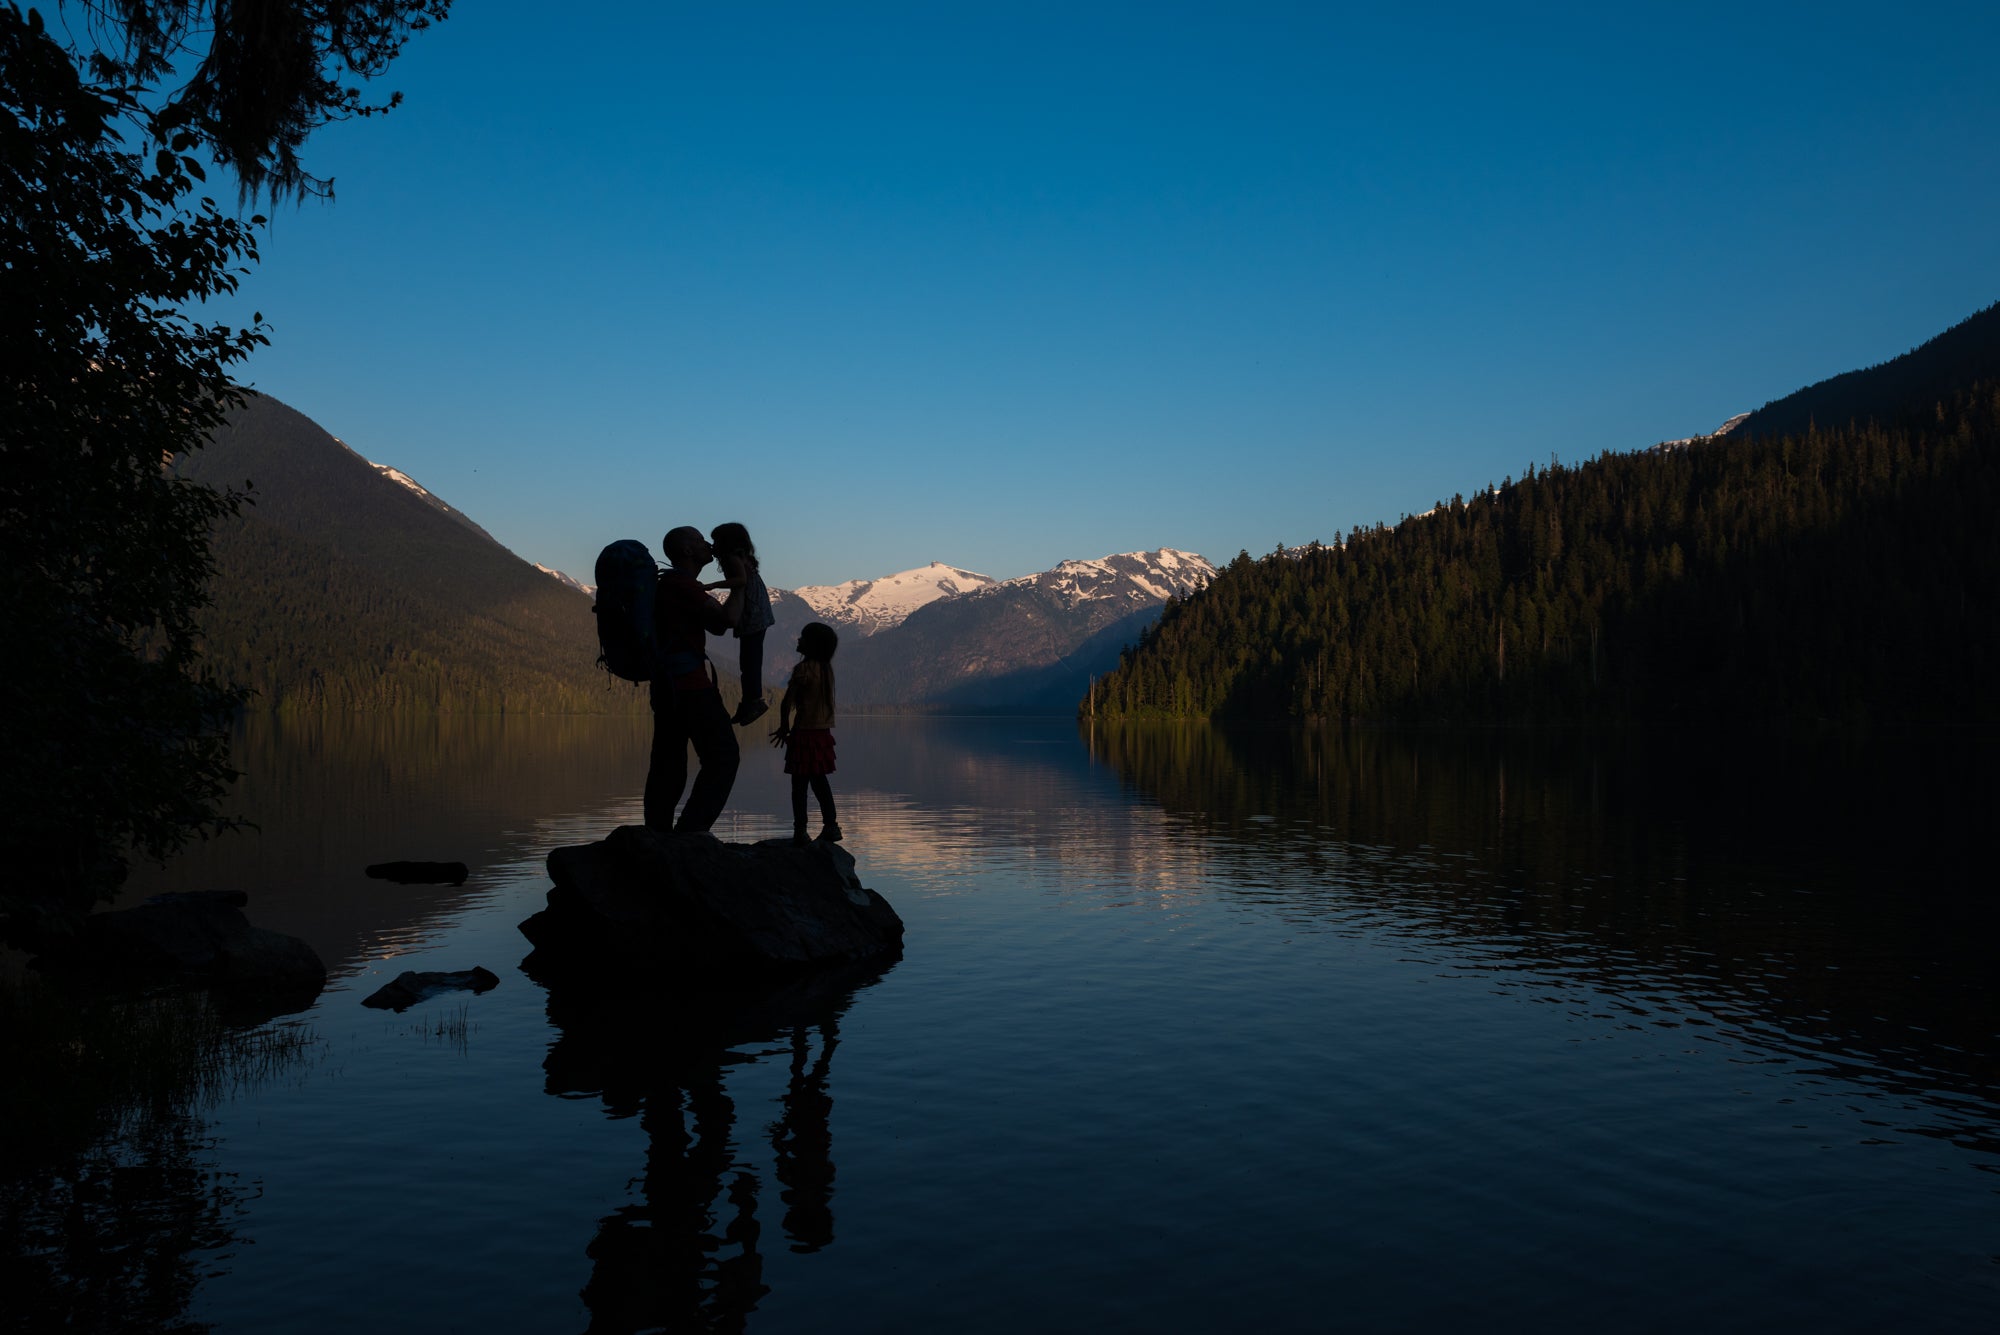 British Columbia Landscape and adventure photographer